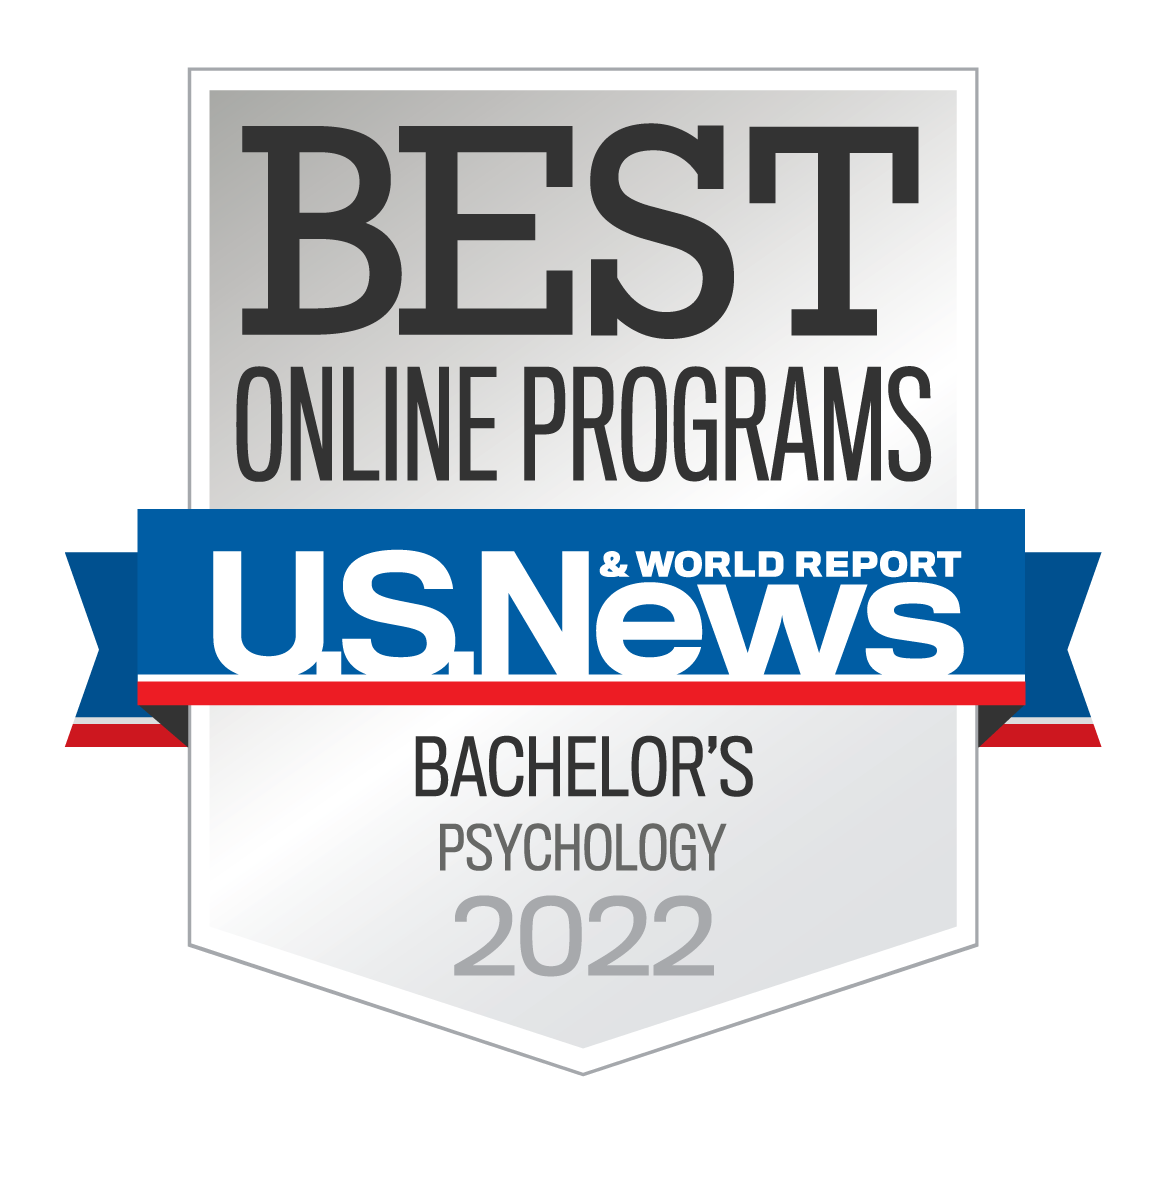 Best Online Programs Bachelors Psychology 2022